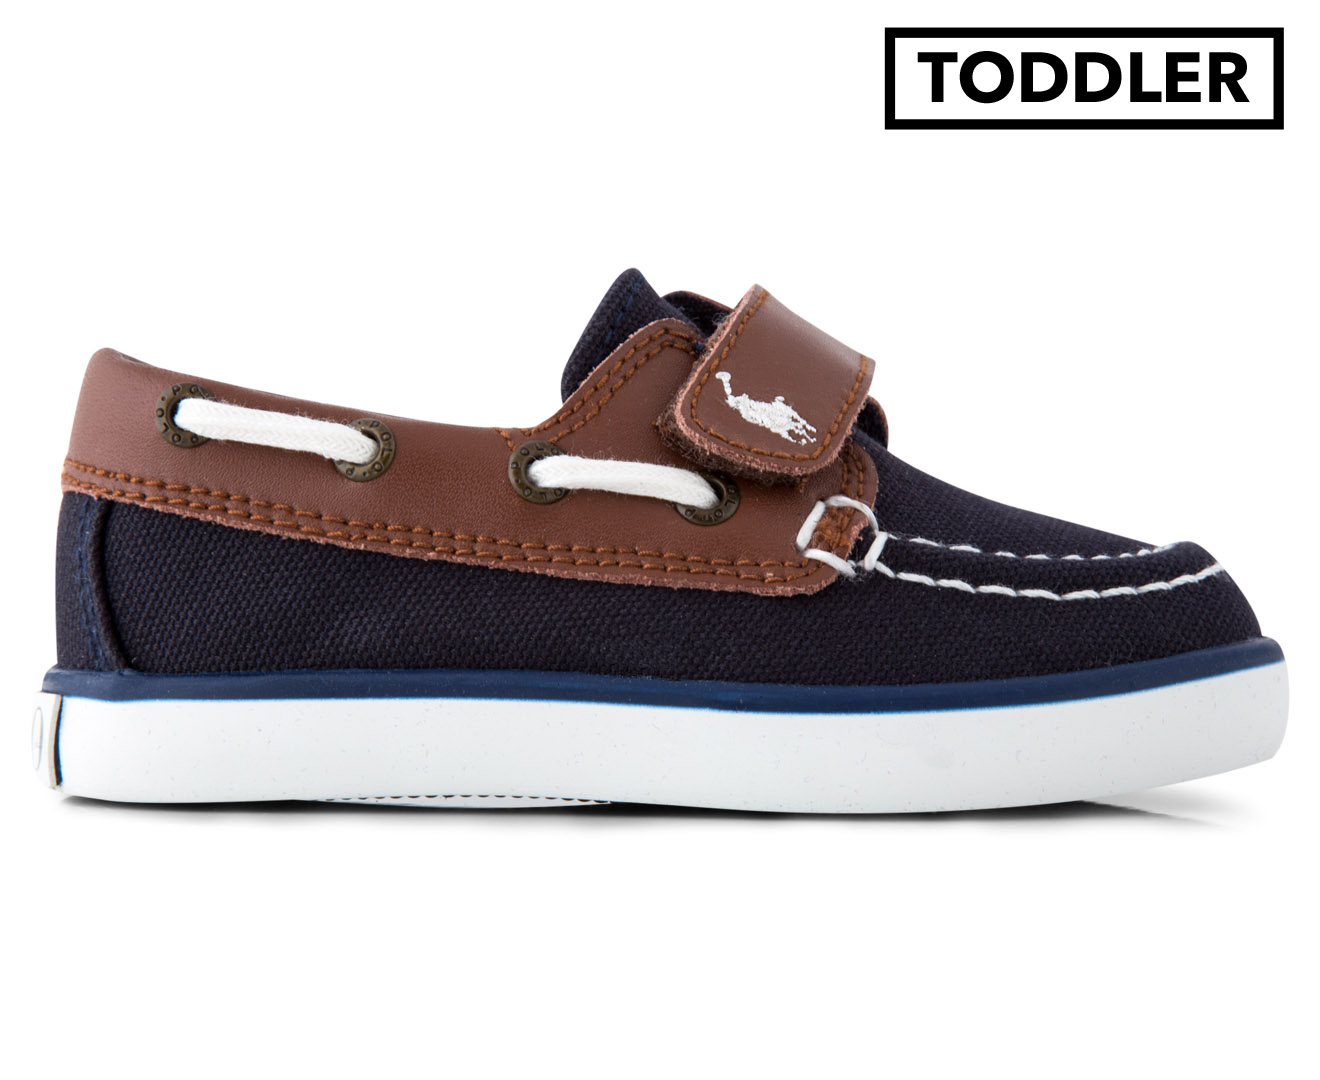 Polo Ralph Lauren Toddler Sandler-CL EZ Shoe - Navy Canvas/Tan Leather